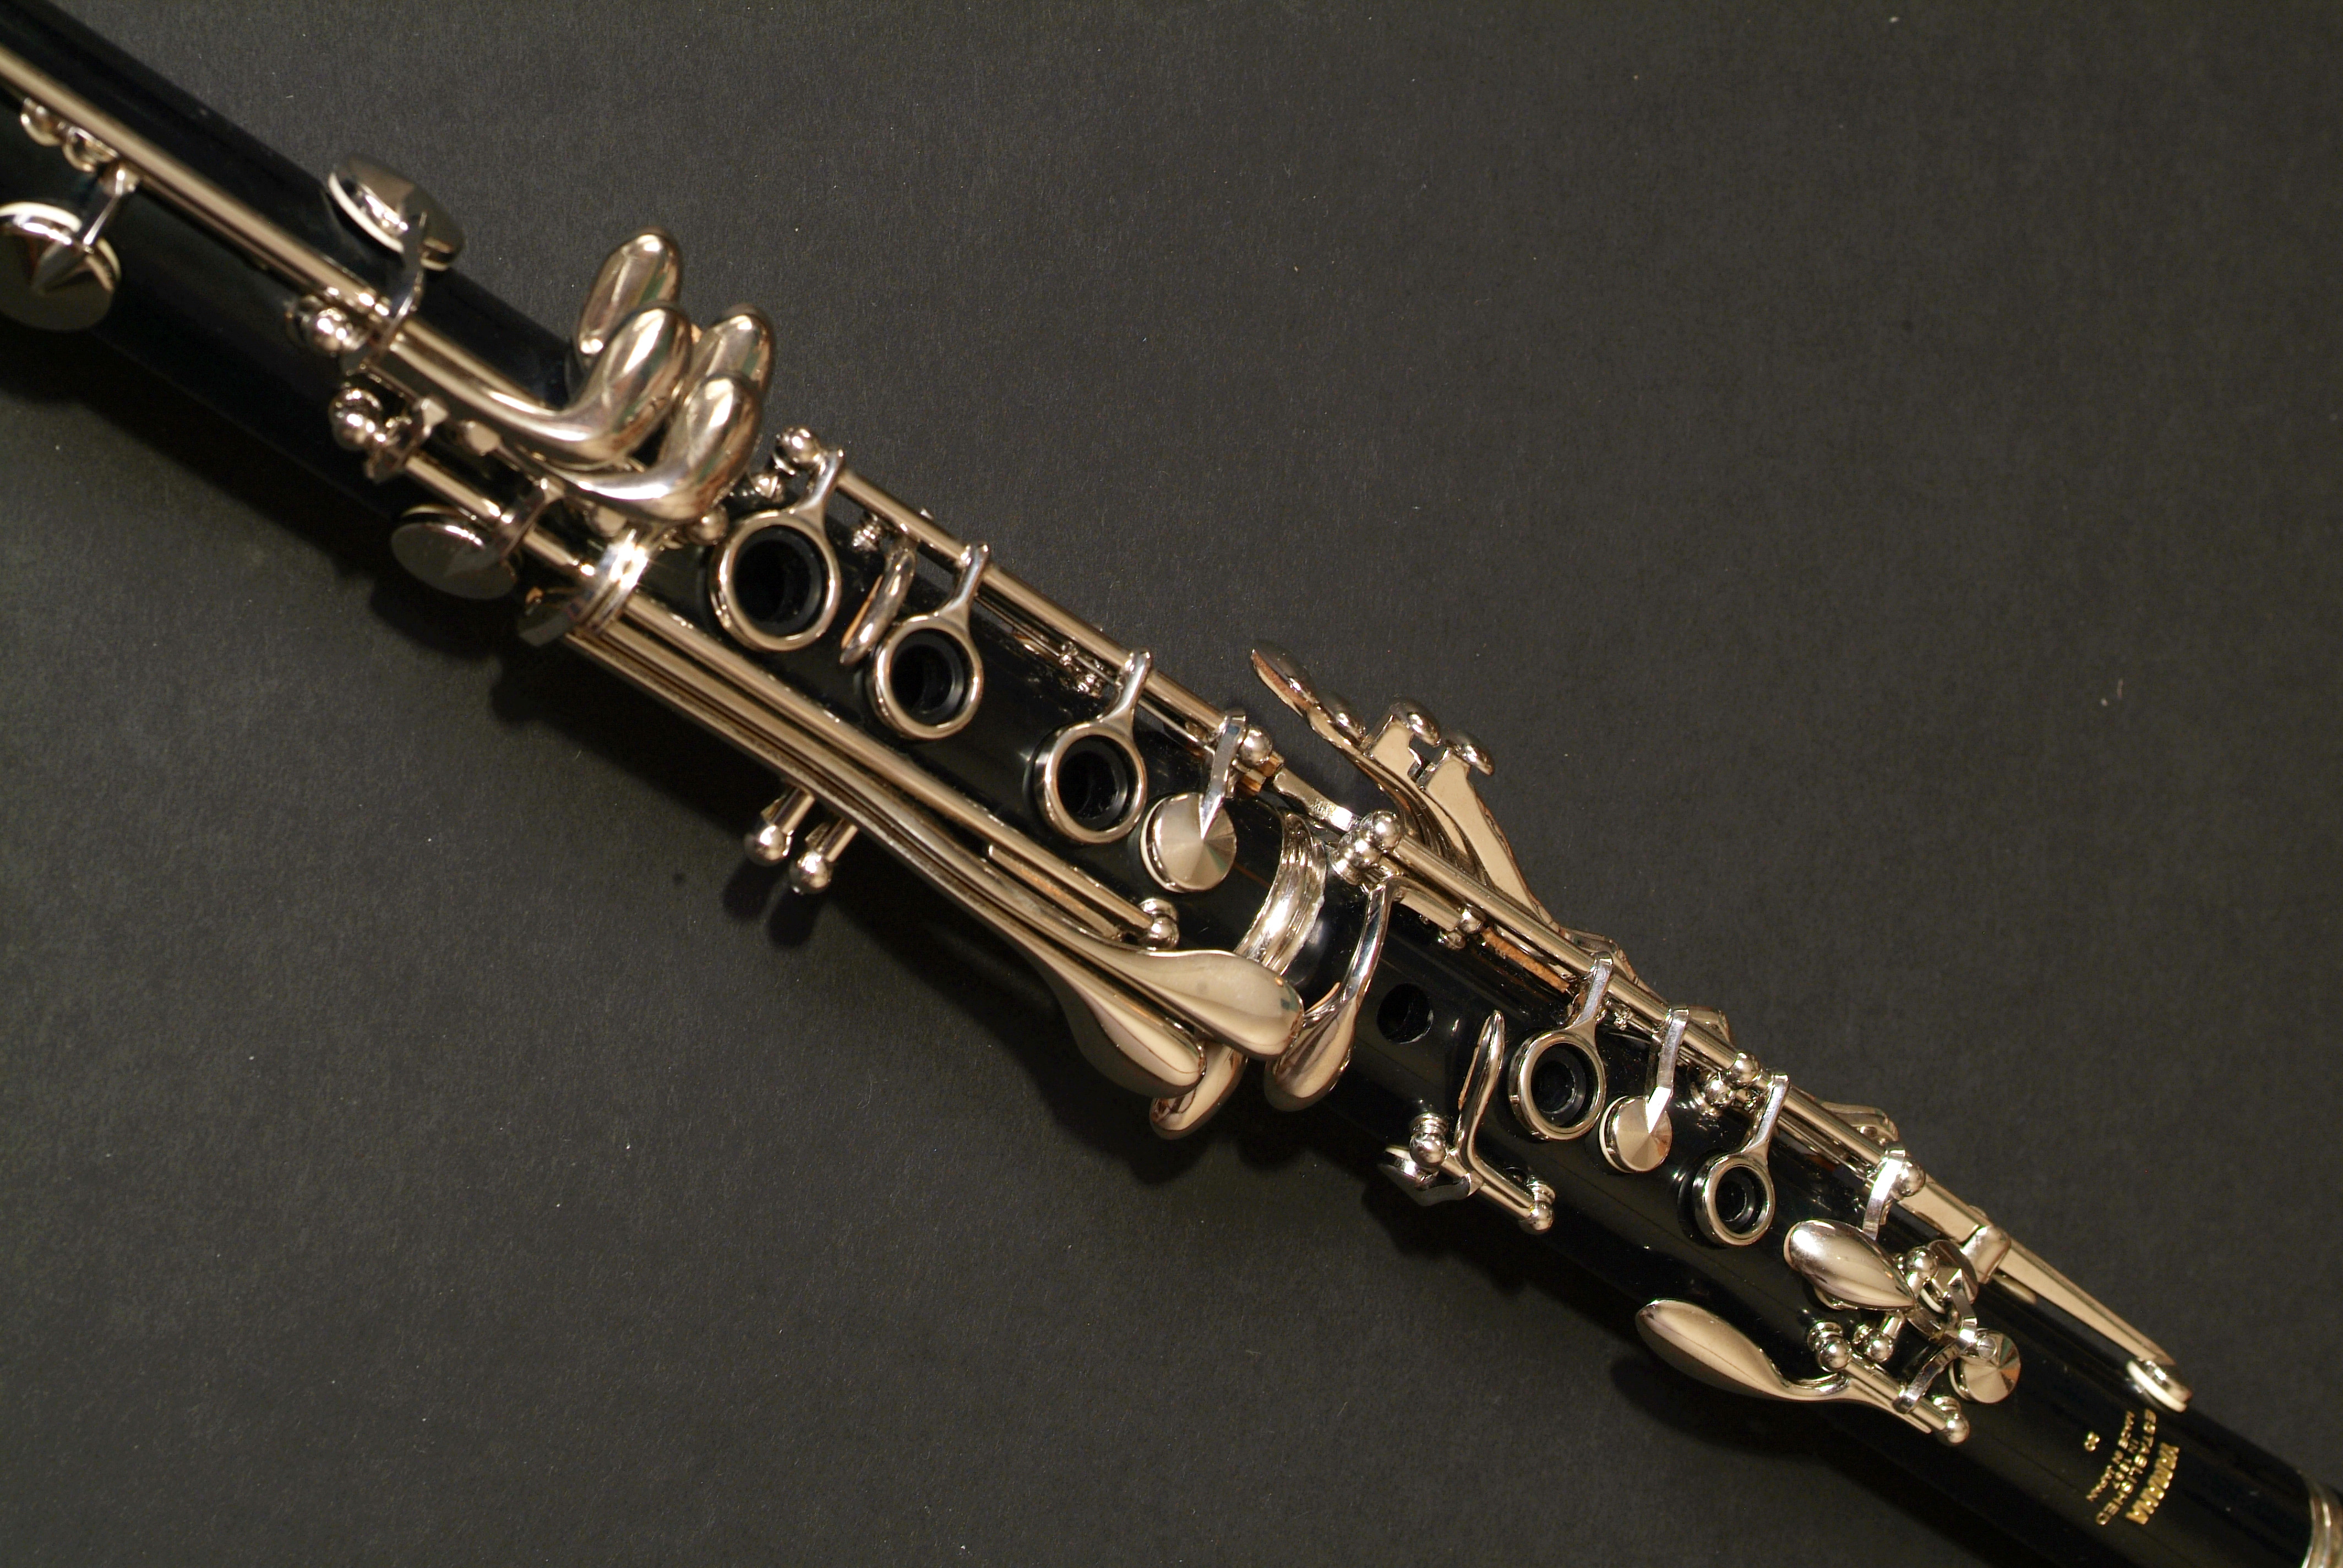 Stock photo of a clarinet